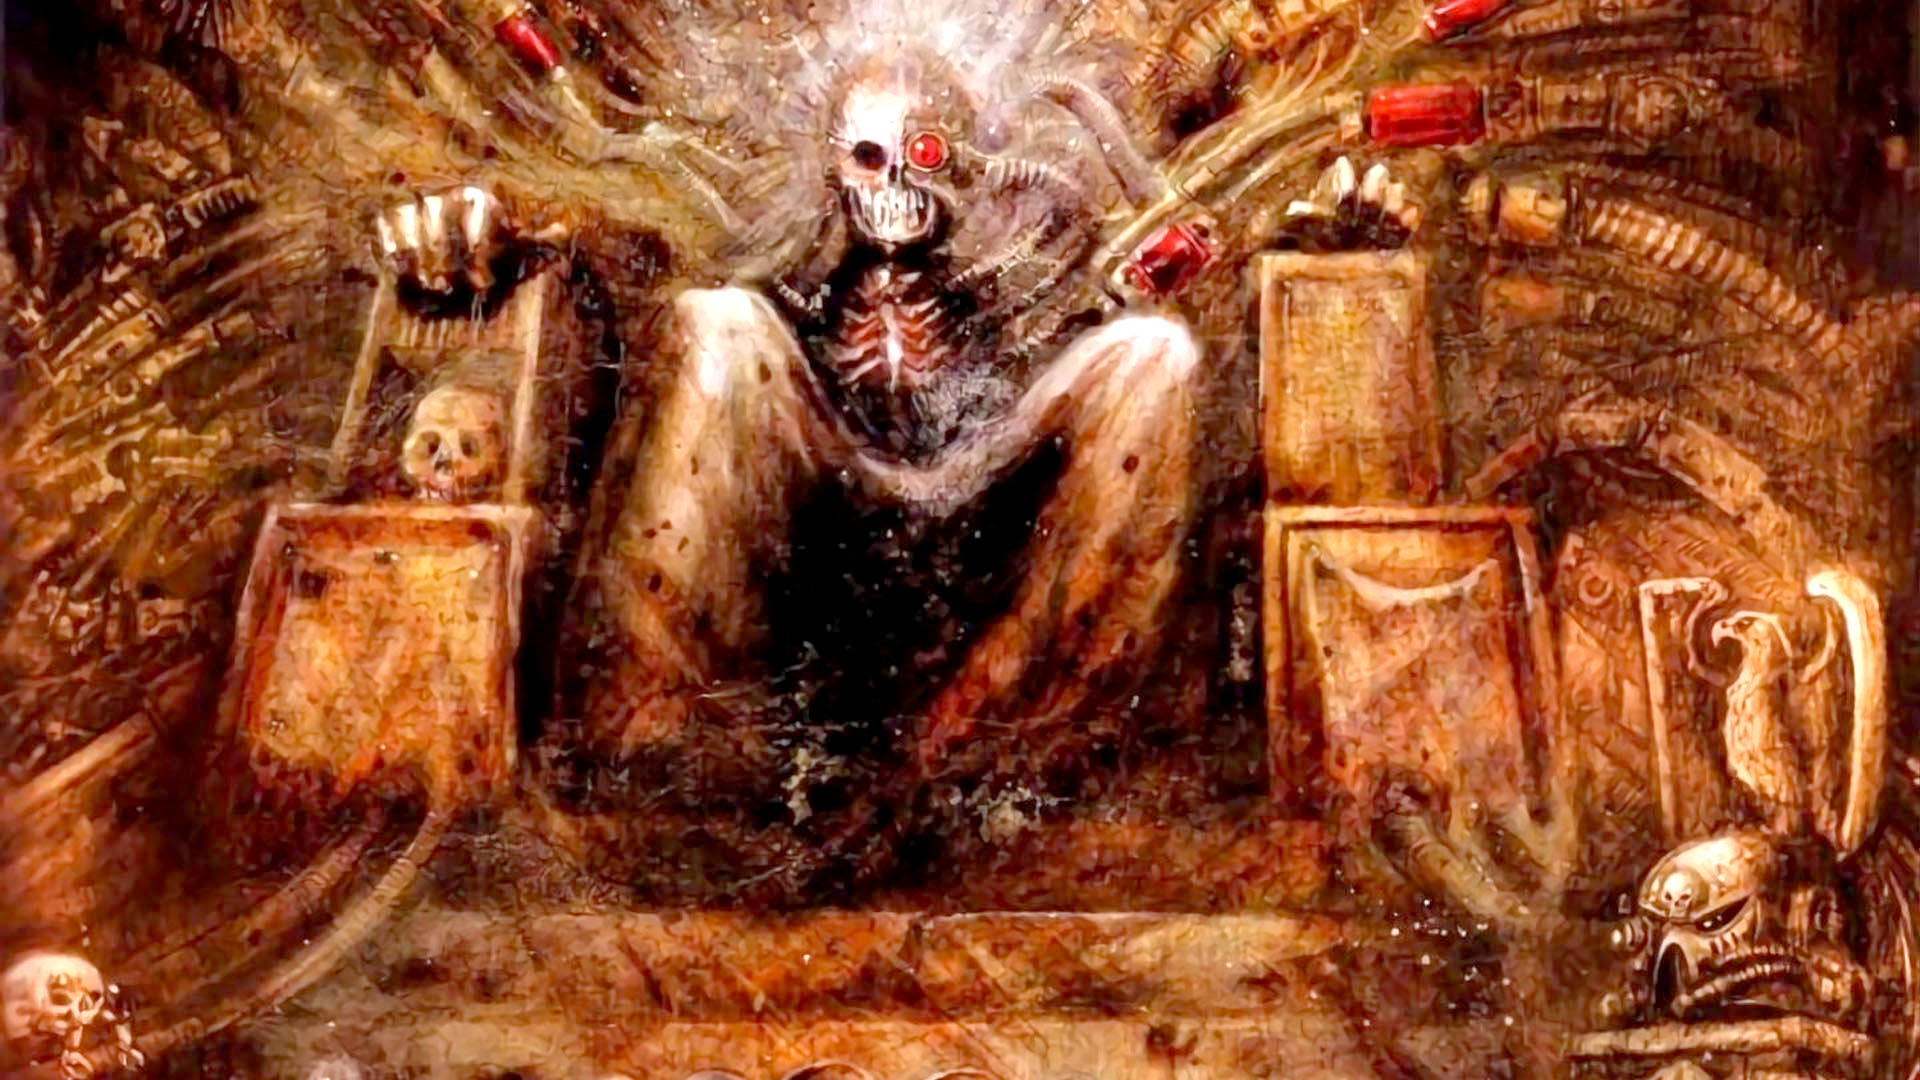 Warhammer 40k Emperor of Mankind guide - Games Workshop artwork showing the Emperor entombed on the Golden Throne